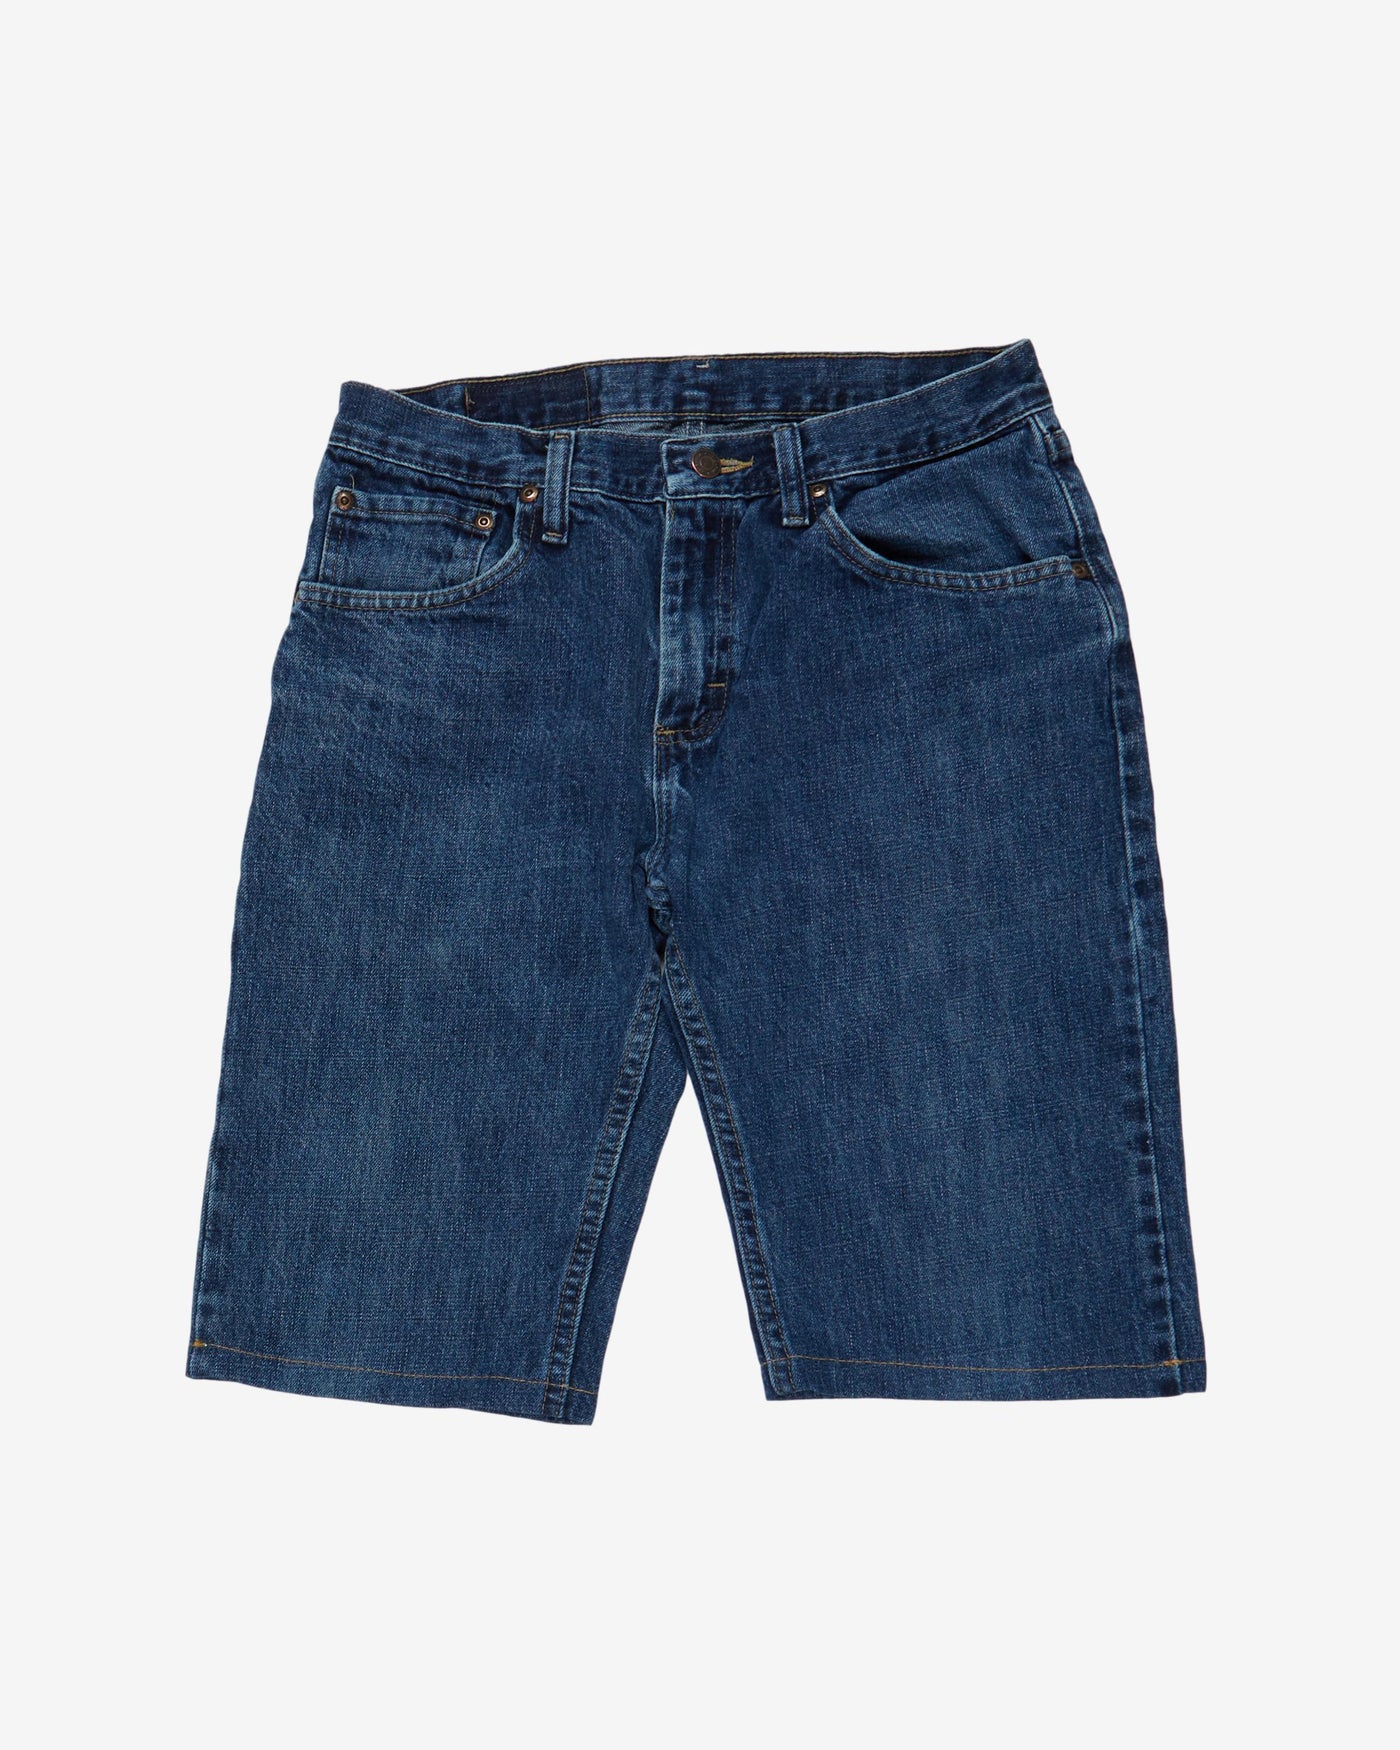 wrangler mid wash blue shorts - w29